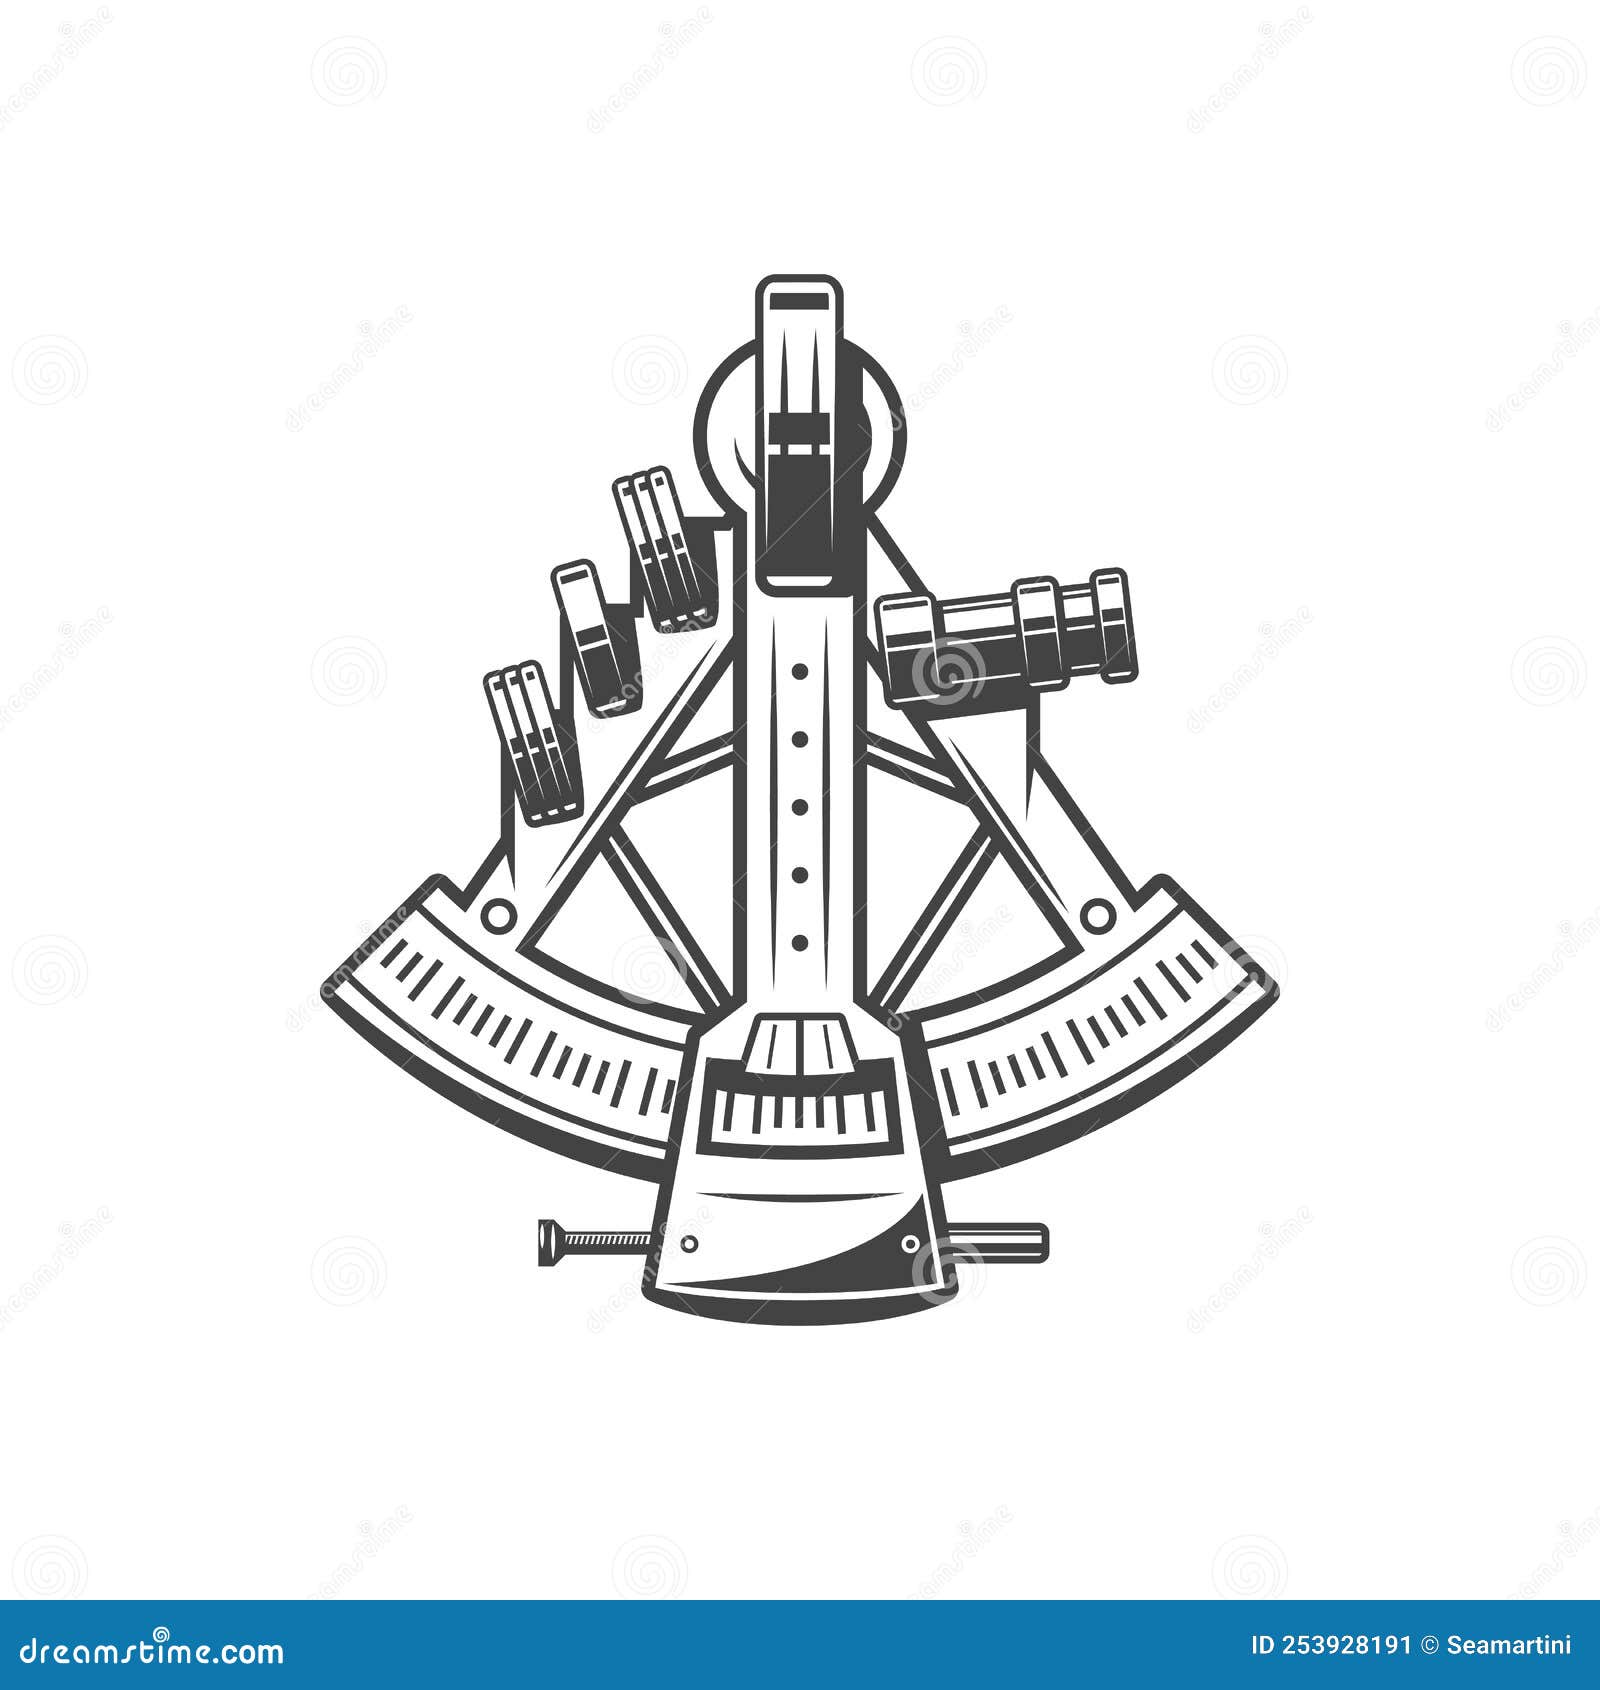 Old Measuring Instrument for Navigation Stock Image - Image of